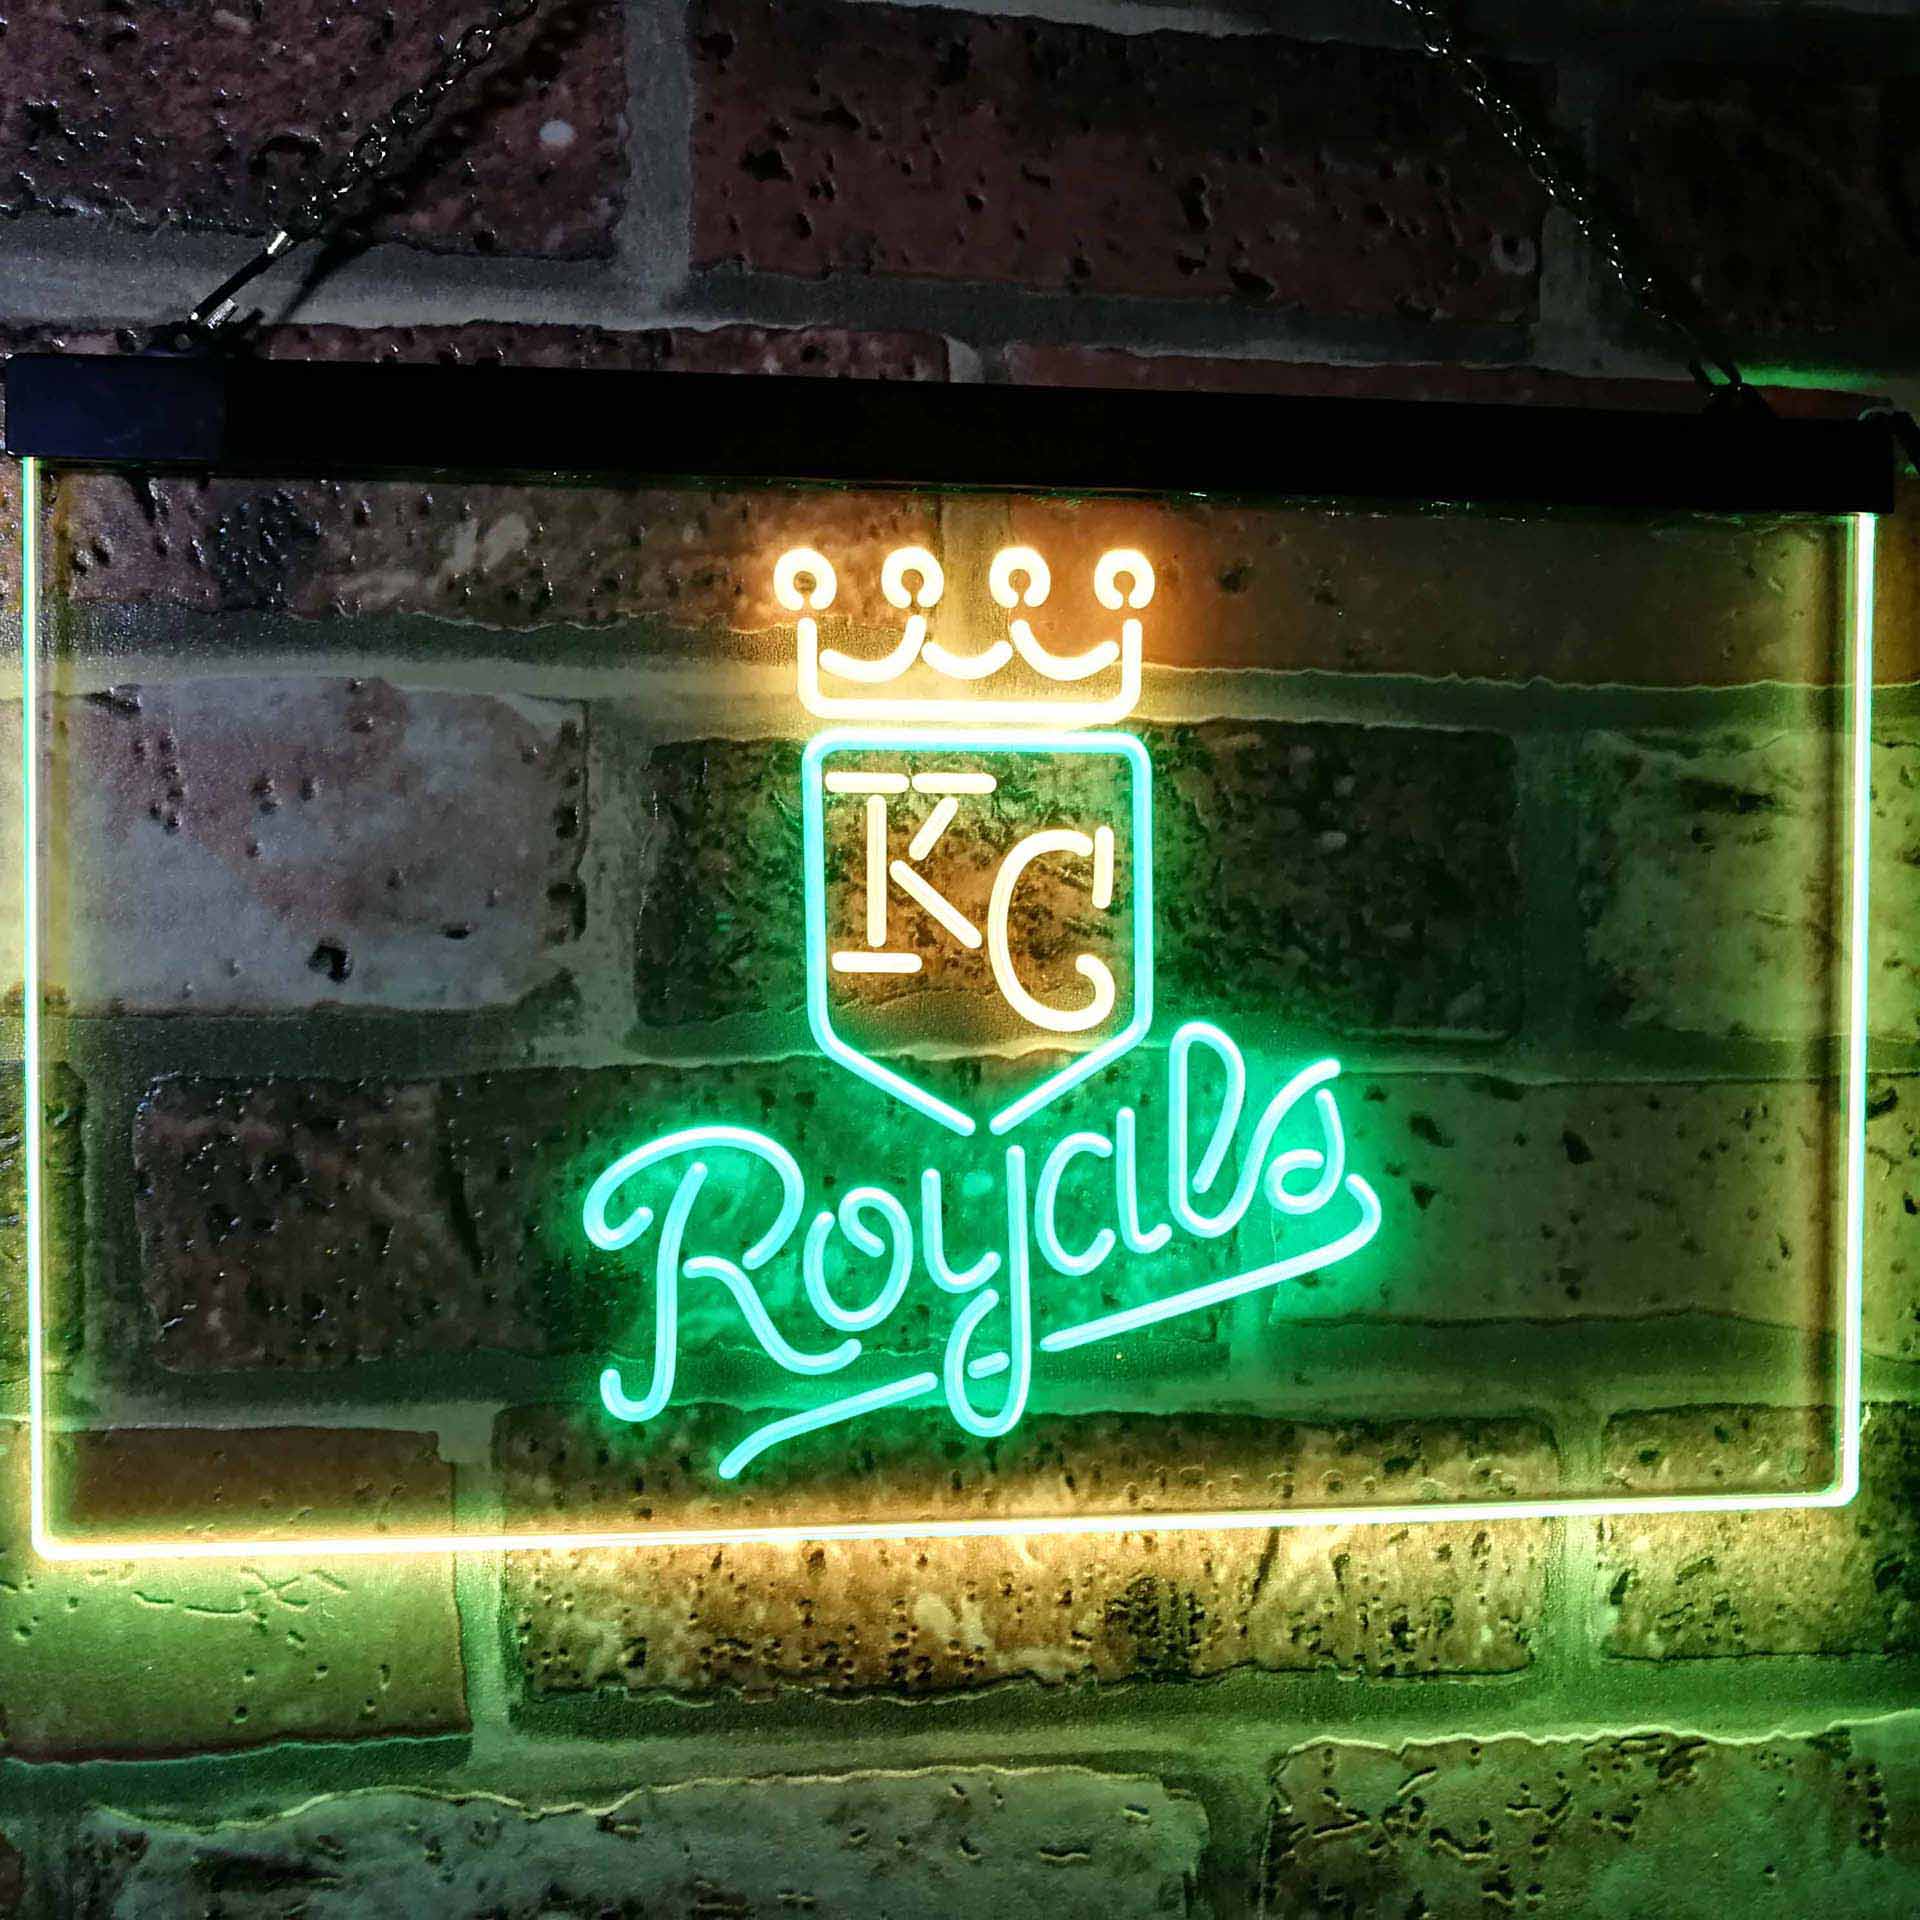 Kansas City Royals LED Neon Sign